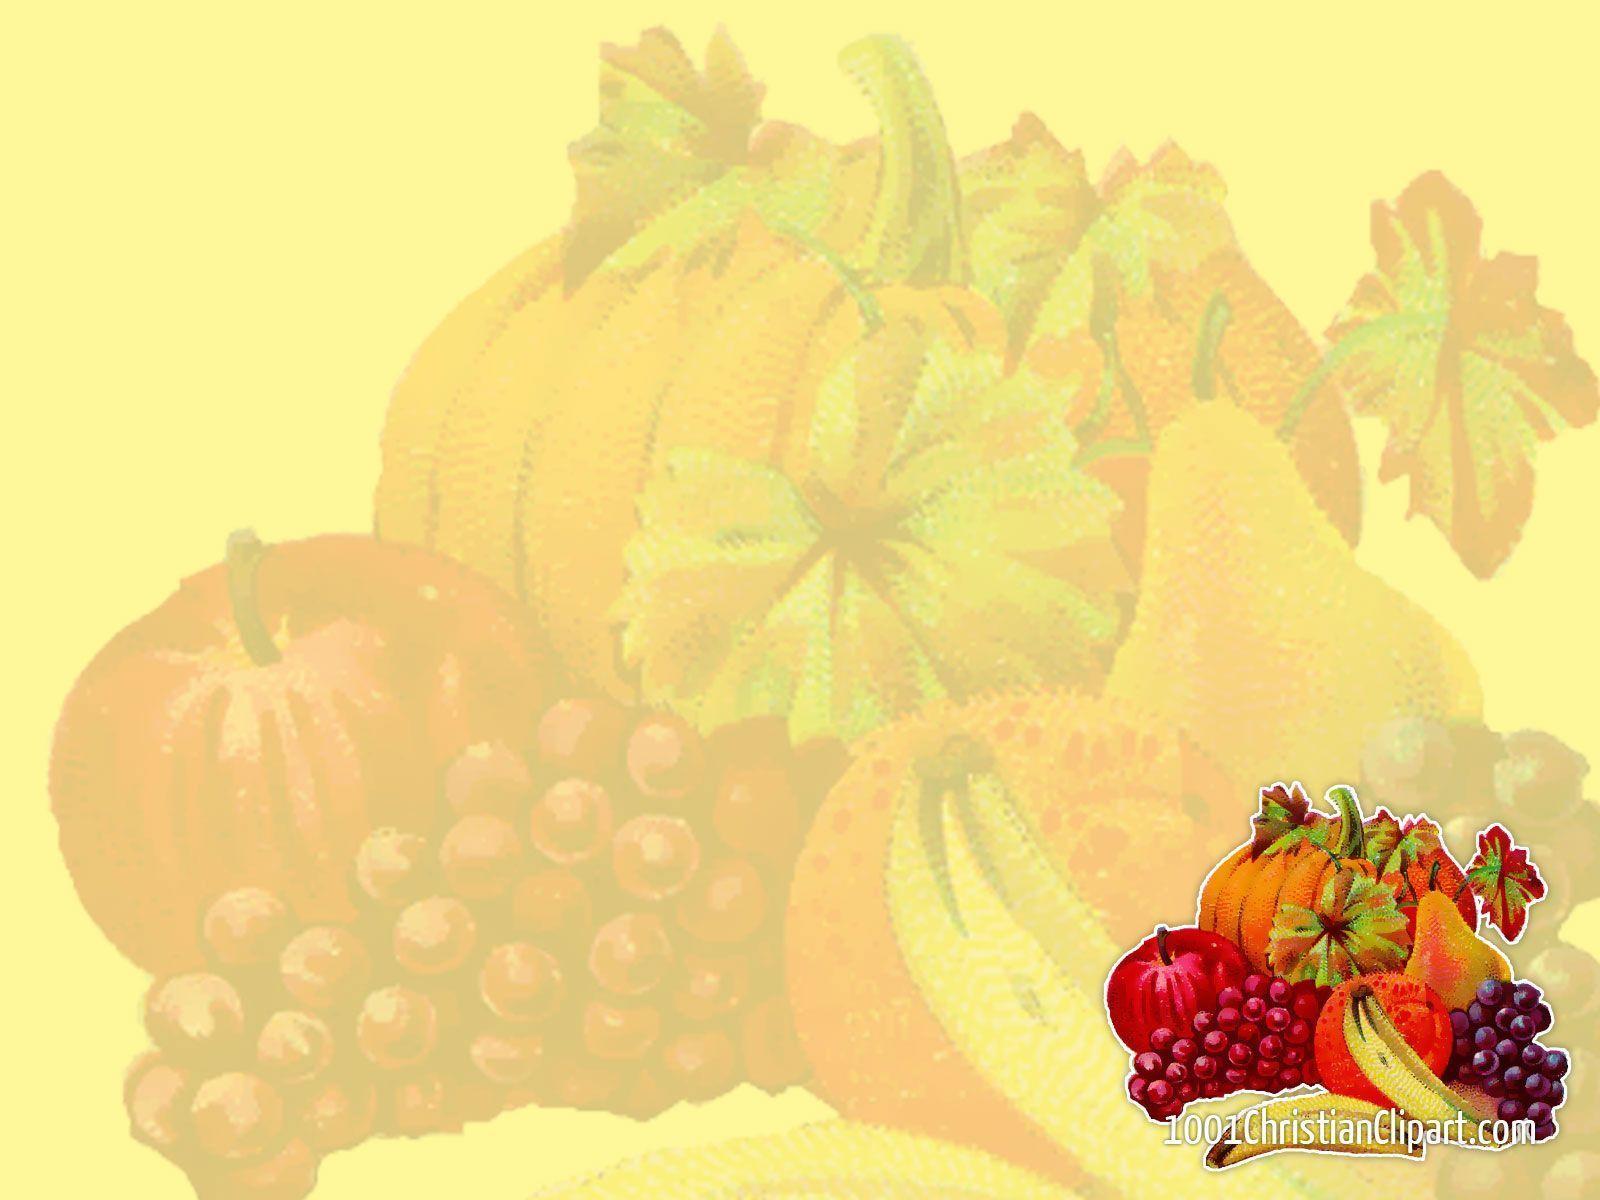 Wallpaper For > Christian Thanksgiving Background Image